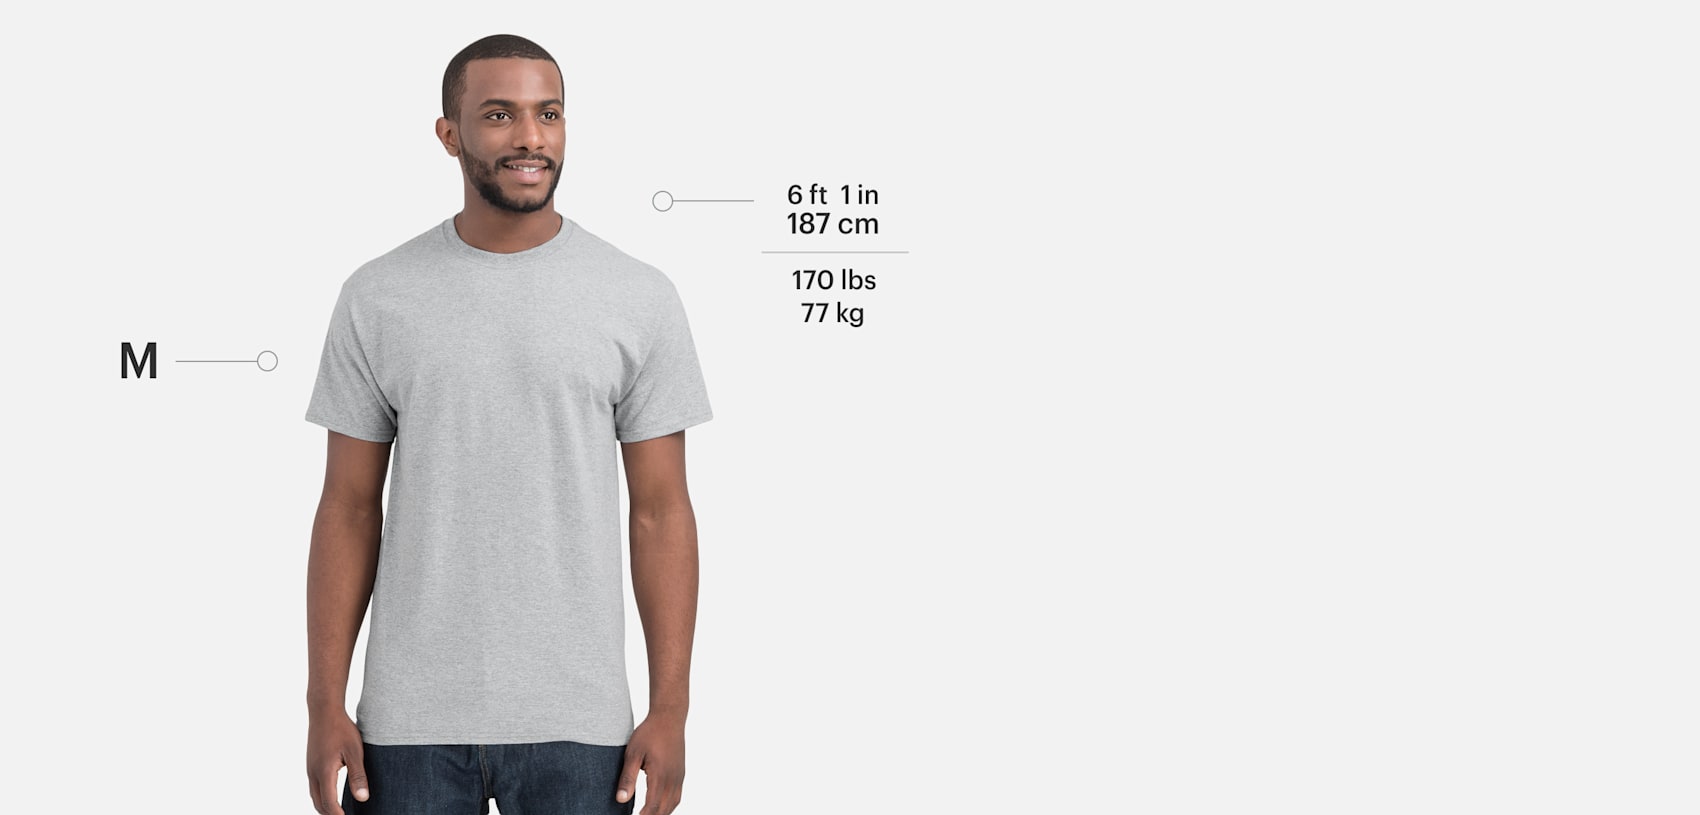 MEN FASHION Shirts & T-shirts Custom fit discount 85% Hollister Shirt Navy Blue XL 